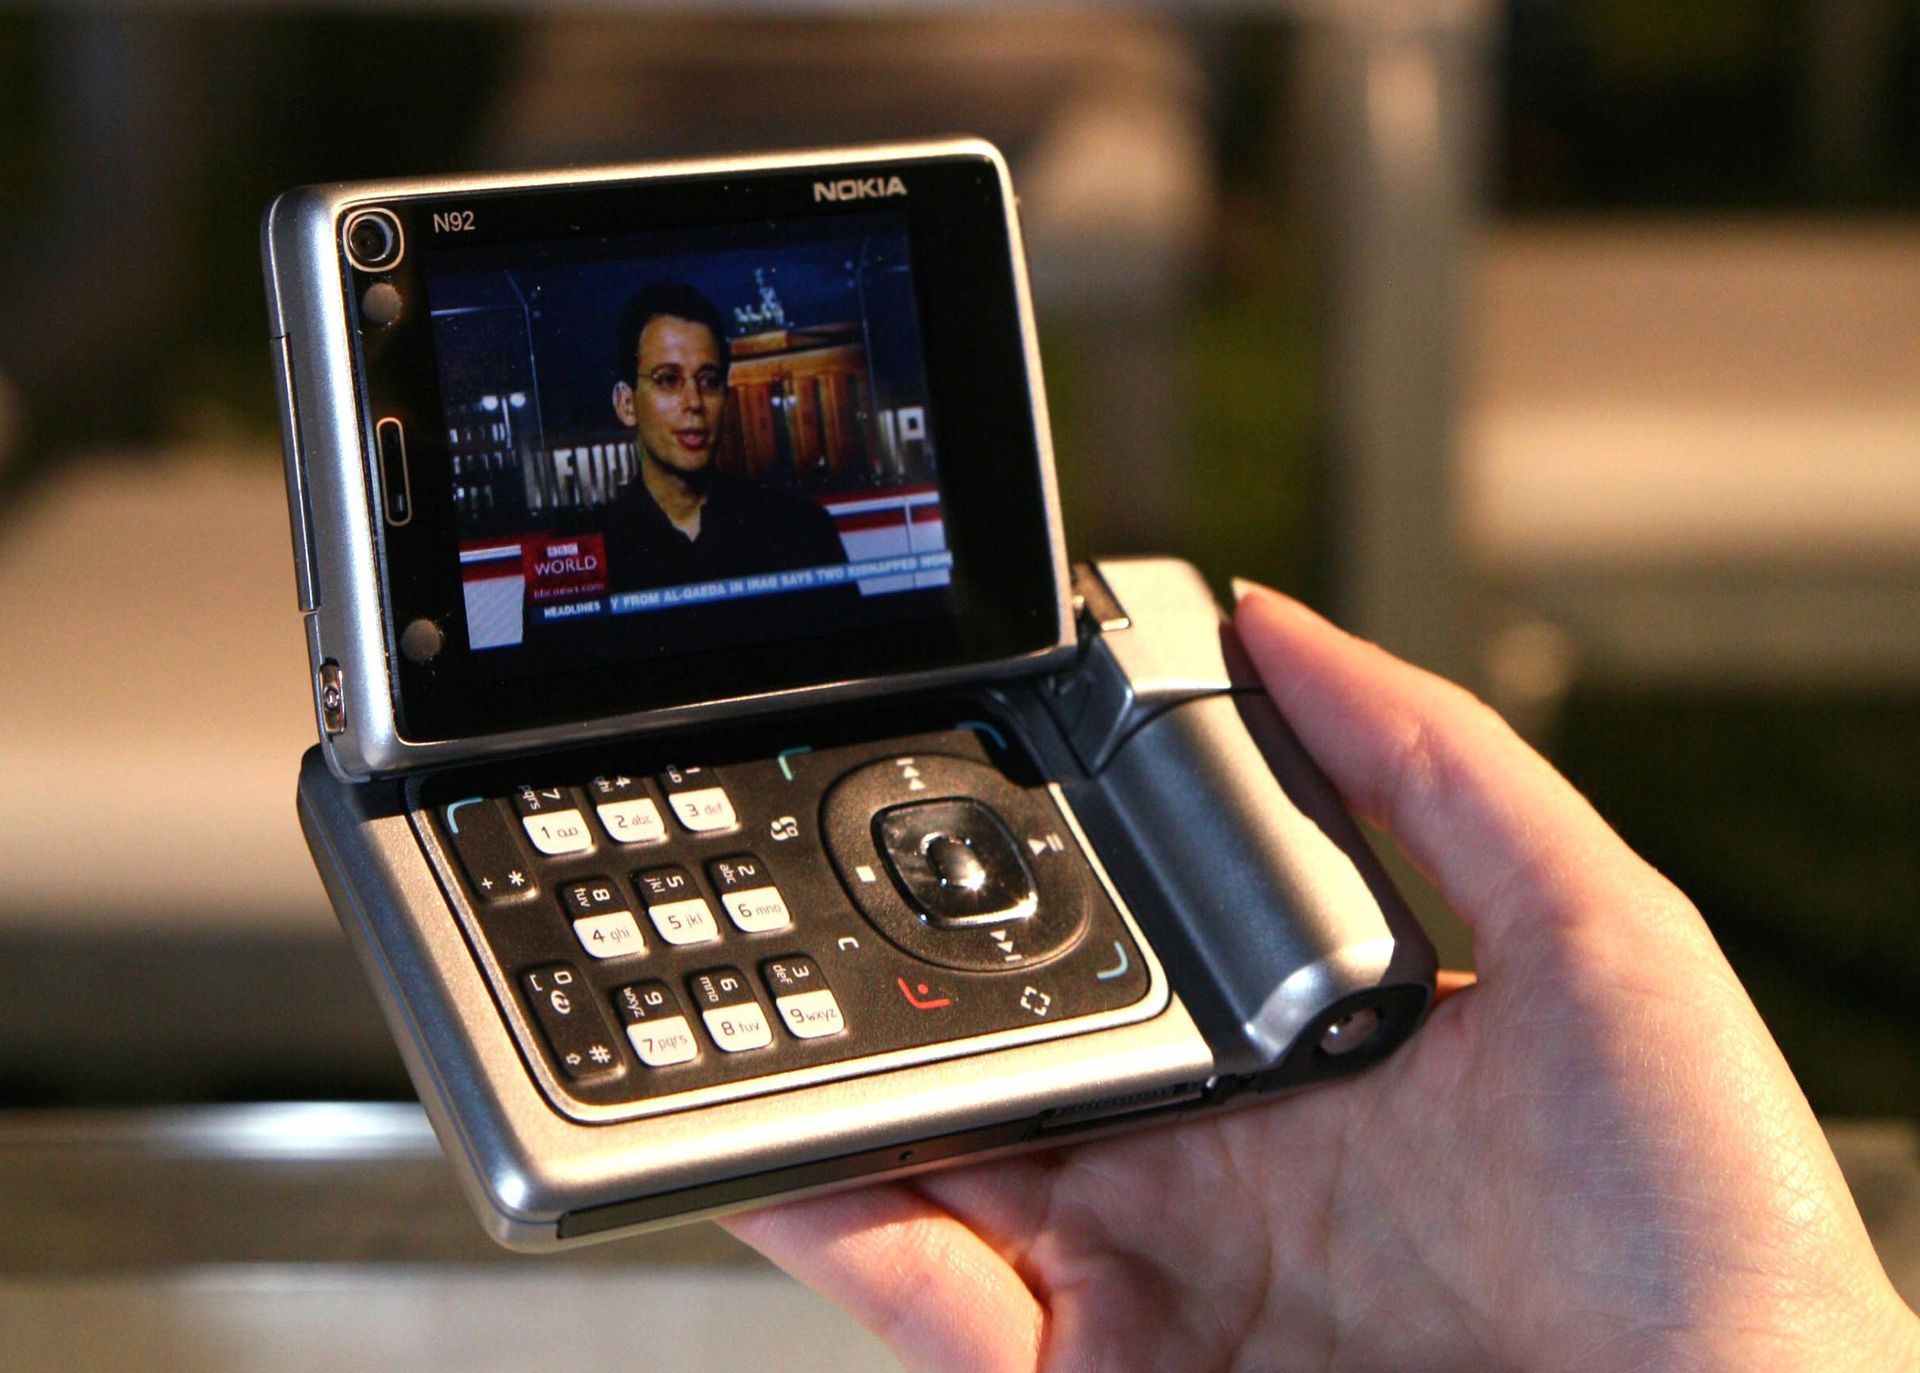 Передача про телефон. Nokia n92. Смартфон с цифровым TV-тюнером Nokia n92. Нокиа 92 10. Смартфон с телевизором.